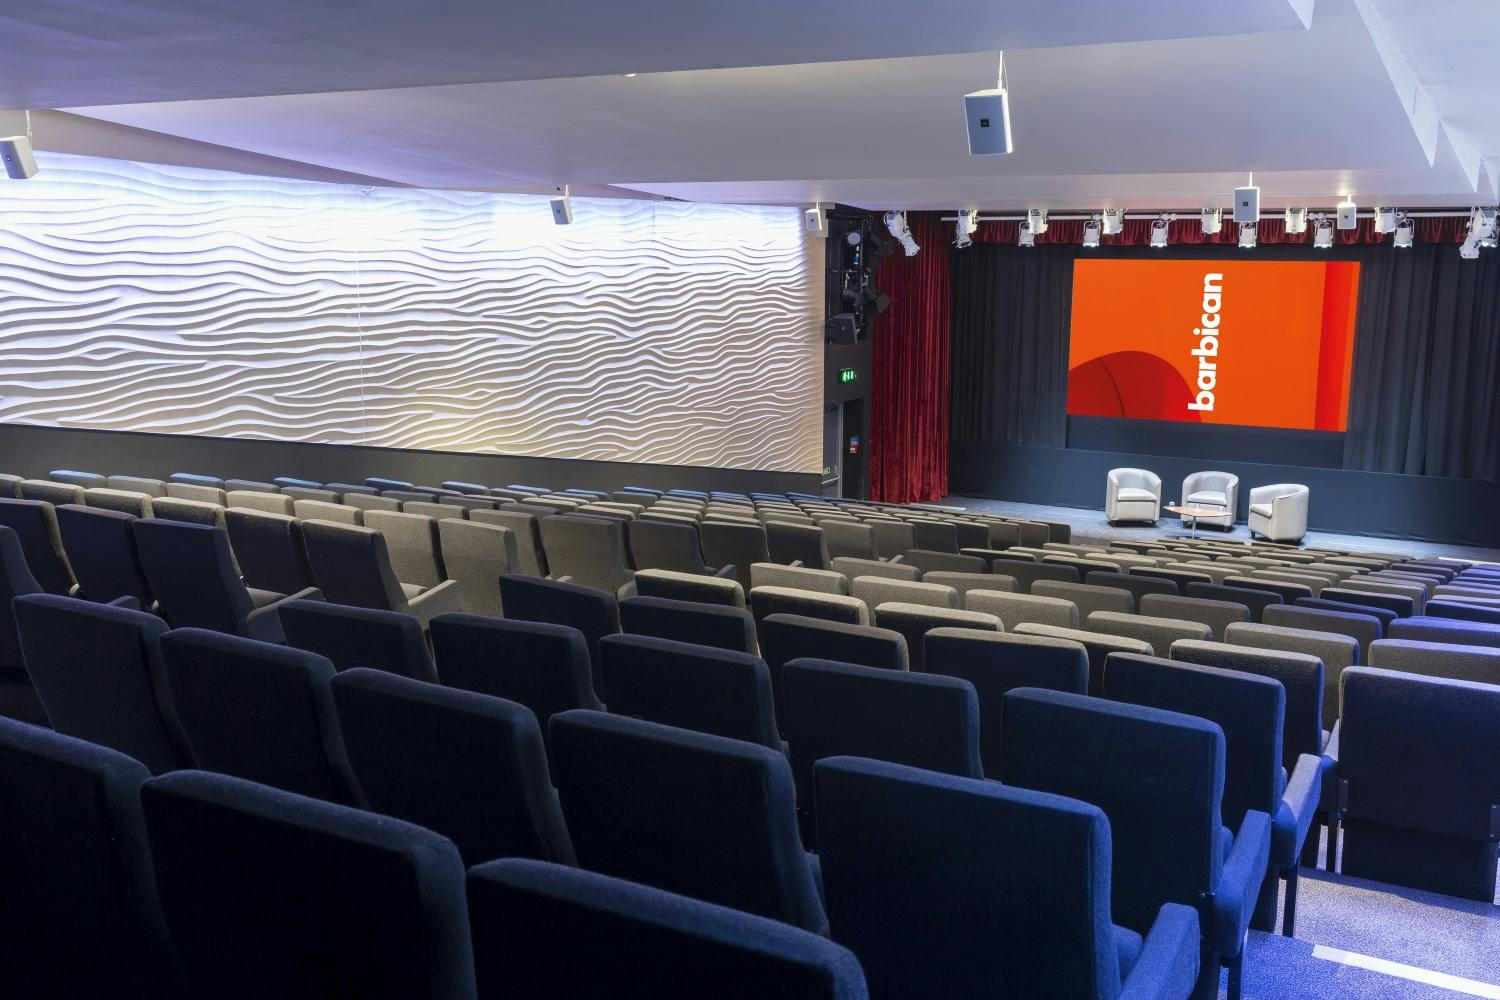 Cinema - Barbican Centre - Screenings in Frobisher Auditorium 1 - Banner